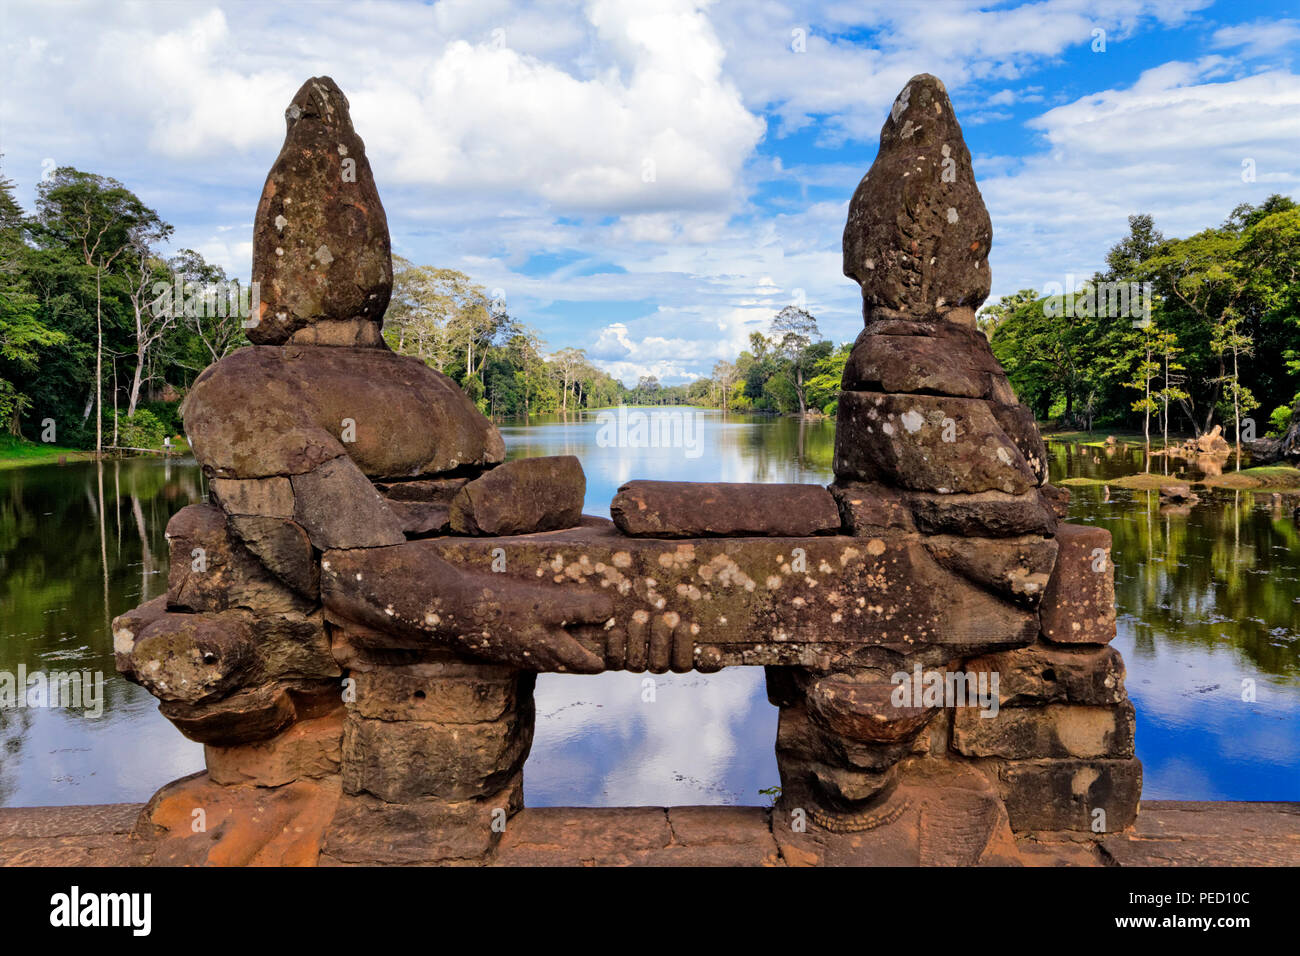 North Gate, Angkor Thom, Siem Reap, Cambodia Stock Photo